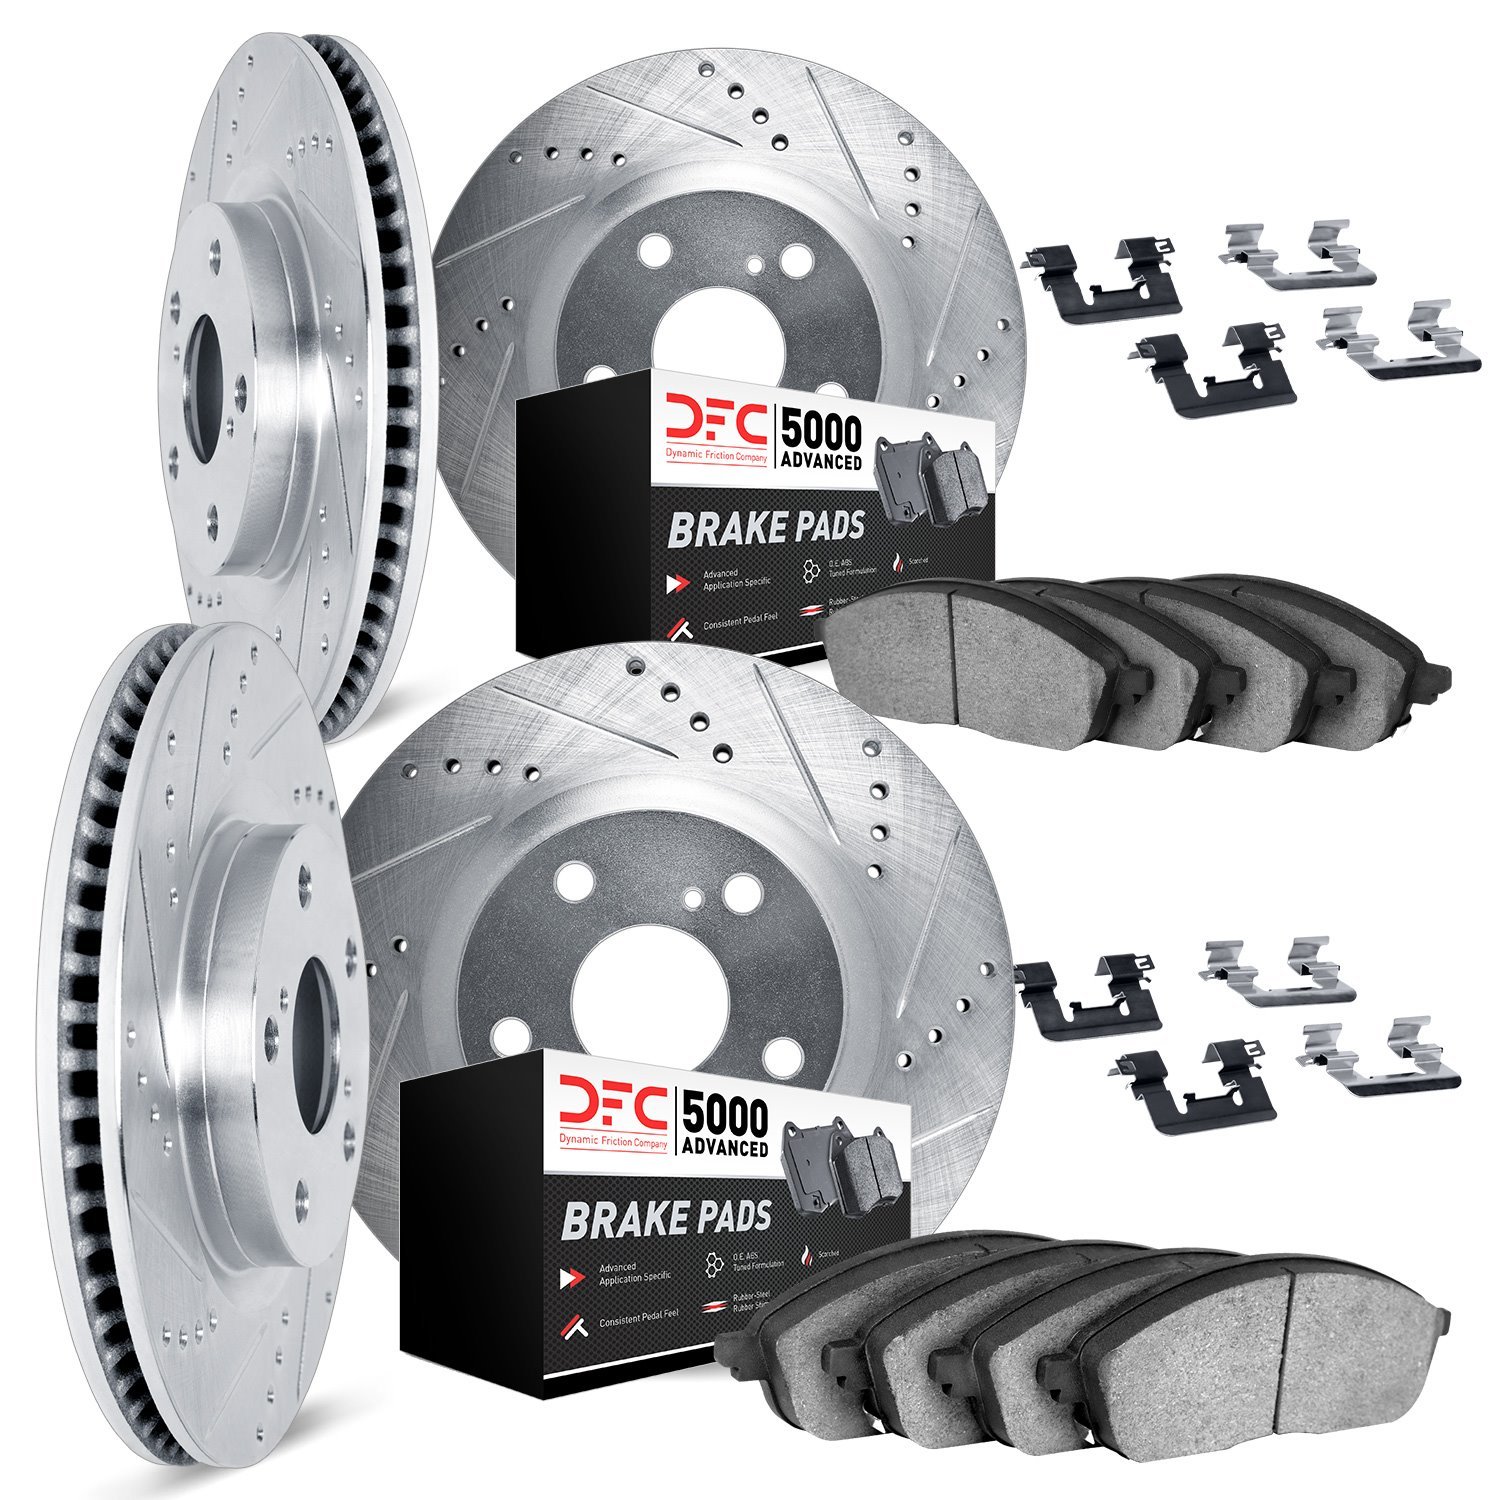 7514-67076 Drilled/Slotted Brake Rotors w/5000 Advanced Brake Pads Kit & Hardware [Silver], 2014-2019 Infiniti/Nissan, Position: